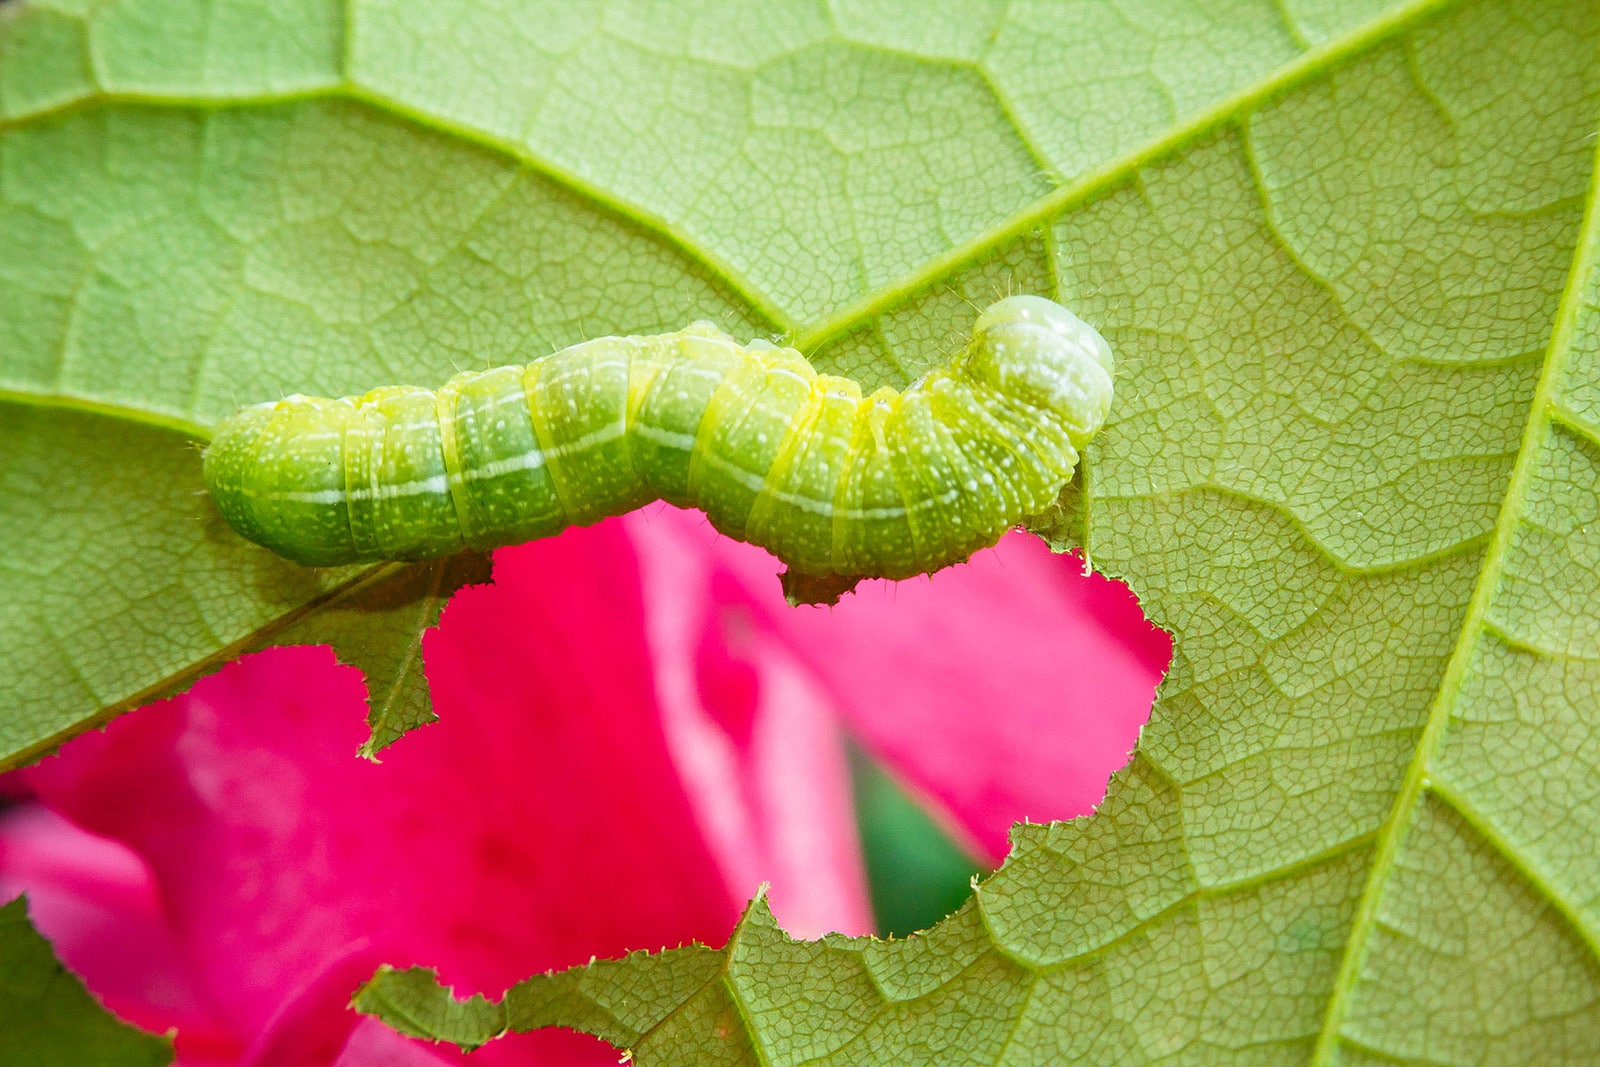 Rough prominent moth caterpillar